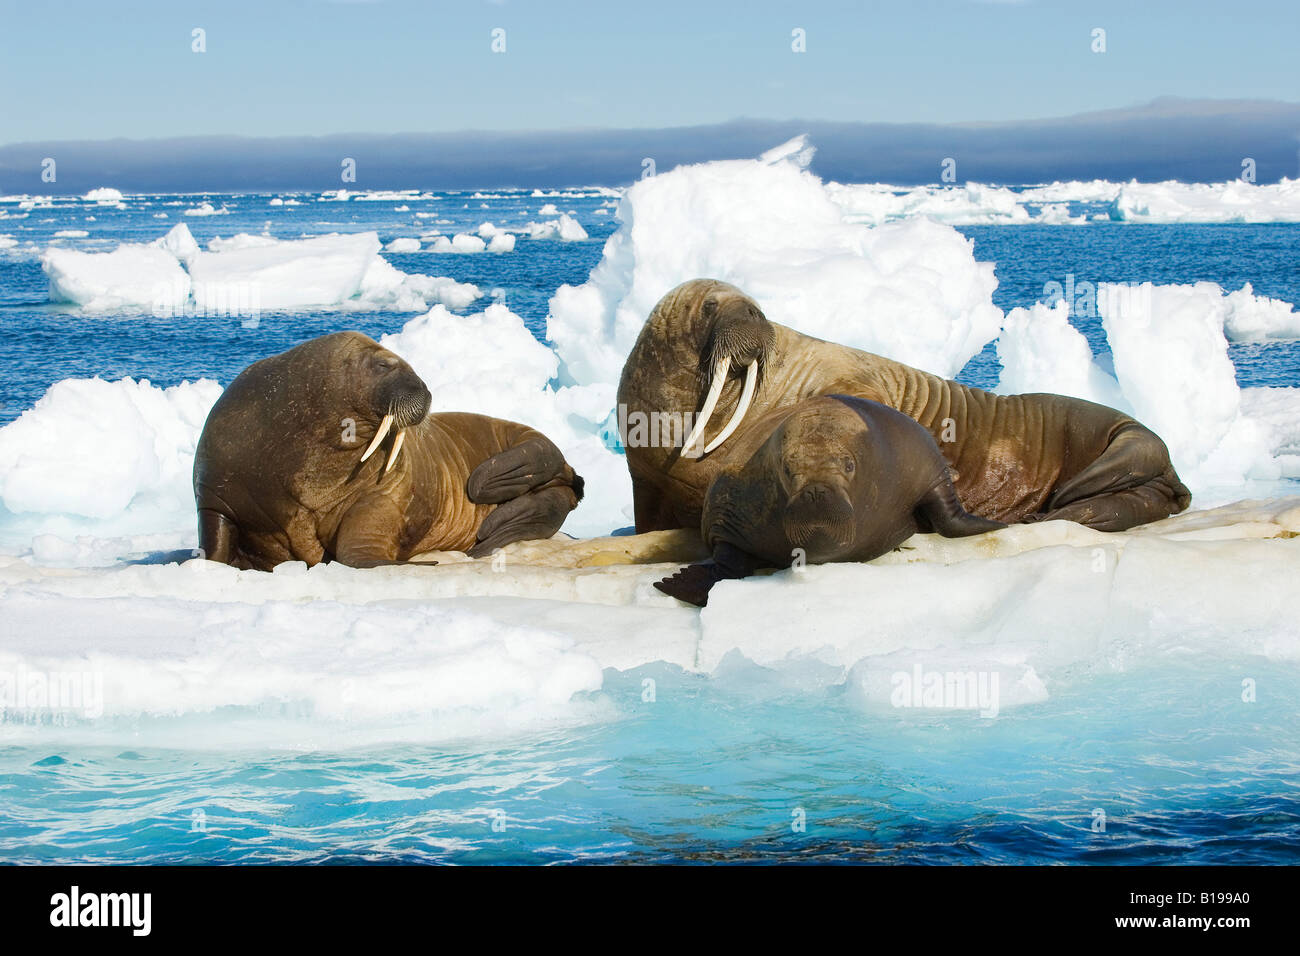 Adult female Atalntic walrus (Odobenus rosmarus), calf and subadult loafing on pack ice, Svalbard Archipelago, Arctic Norway Stock Photo